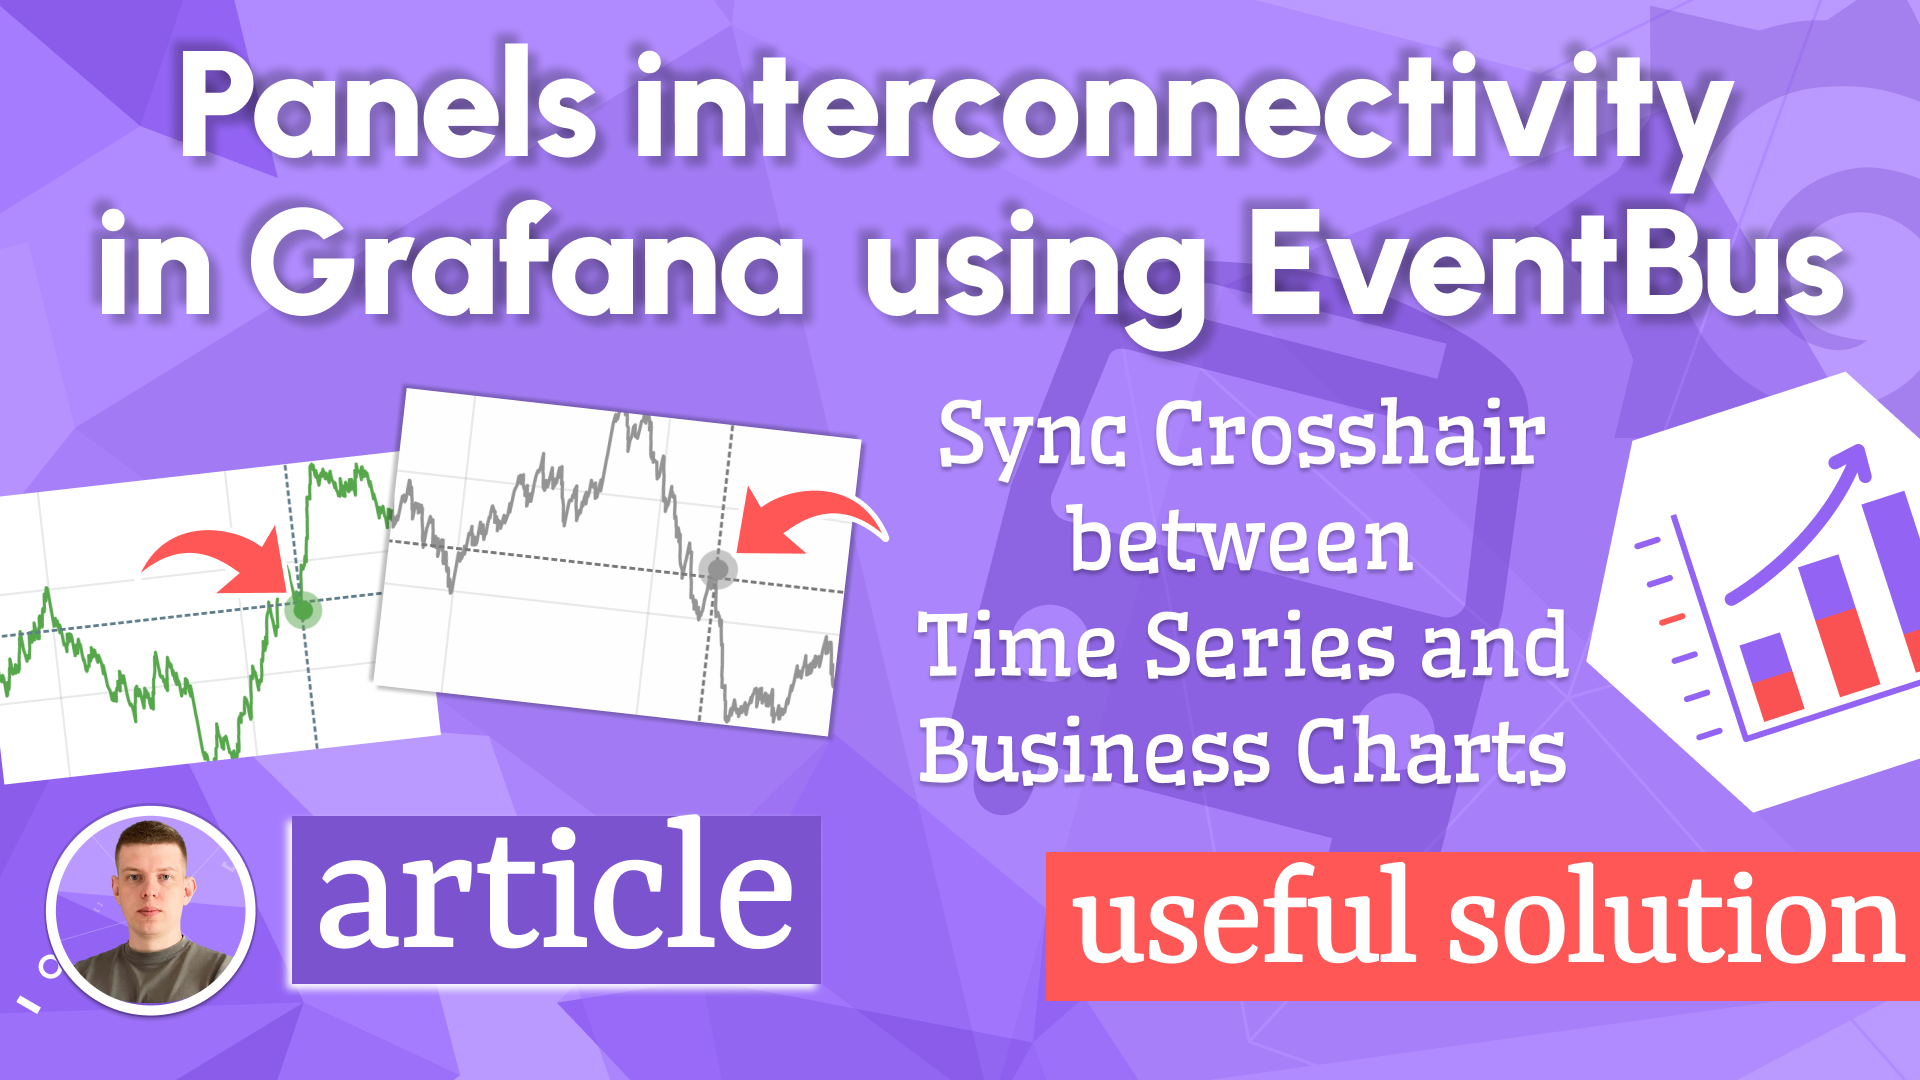 Panels interconnectivity in Grafana via EventBus